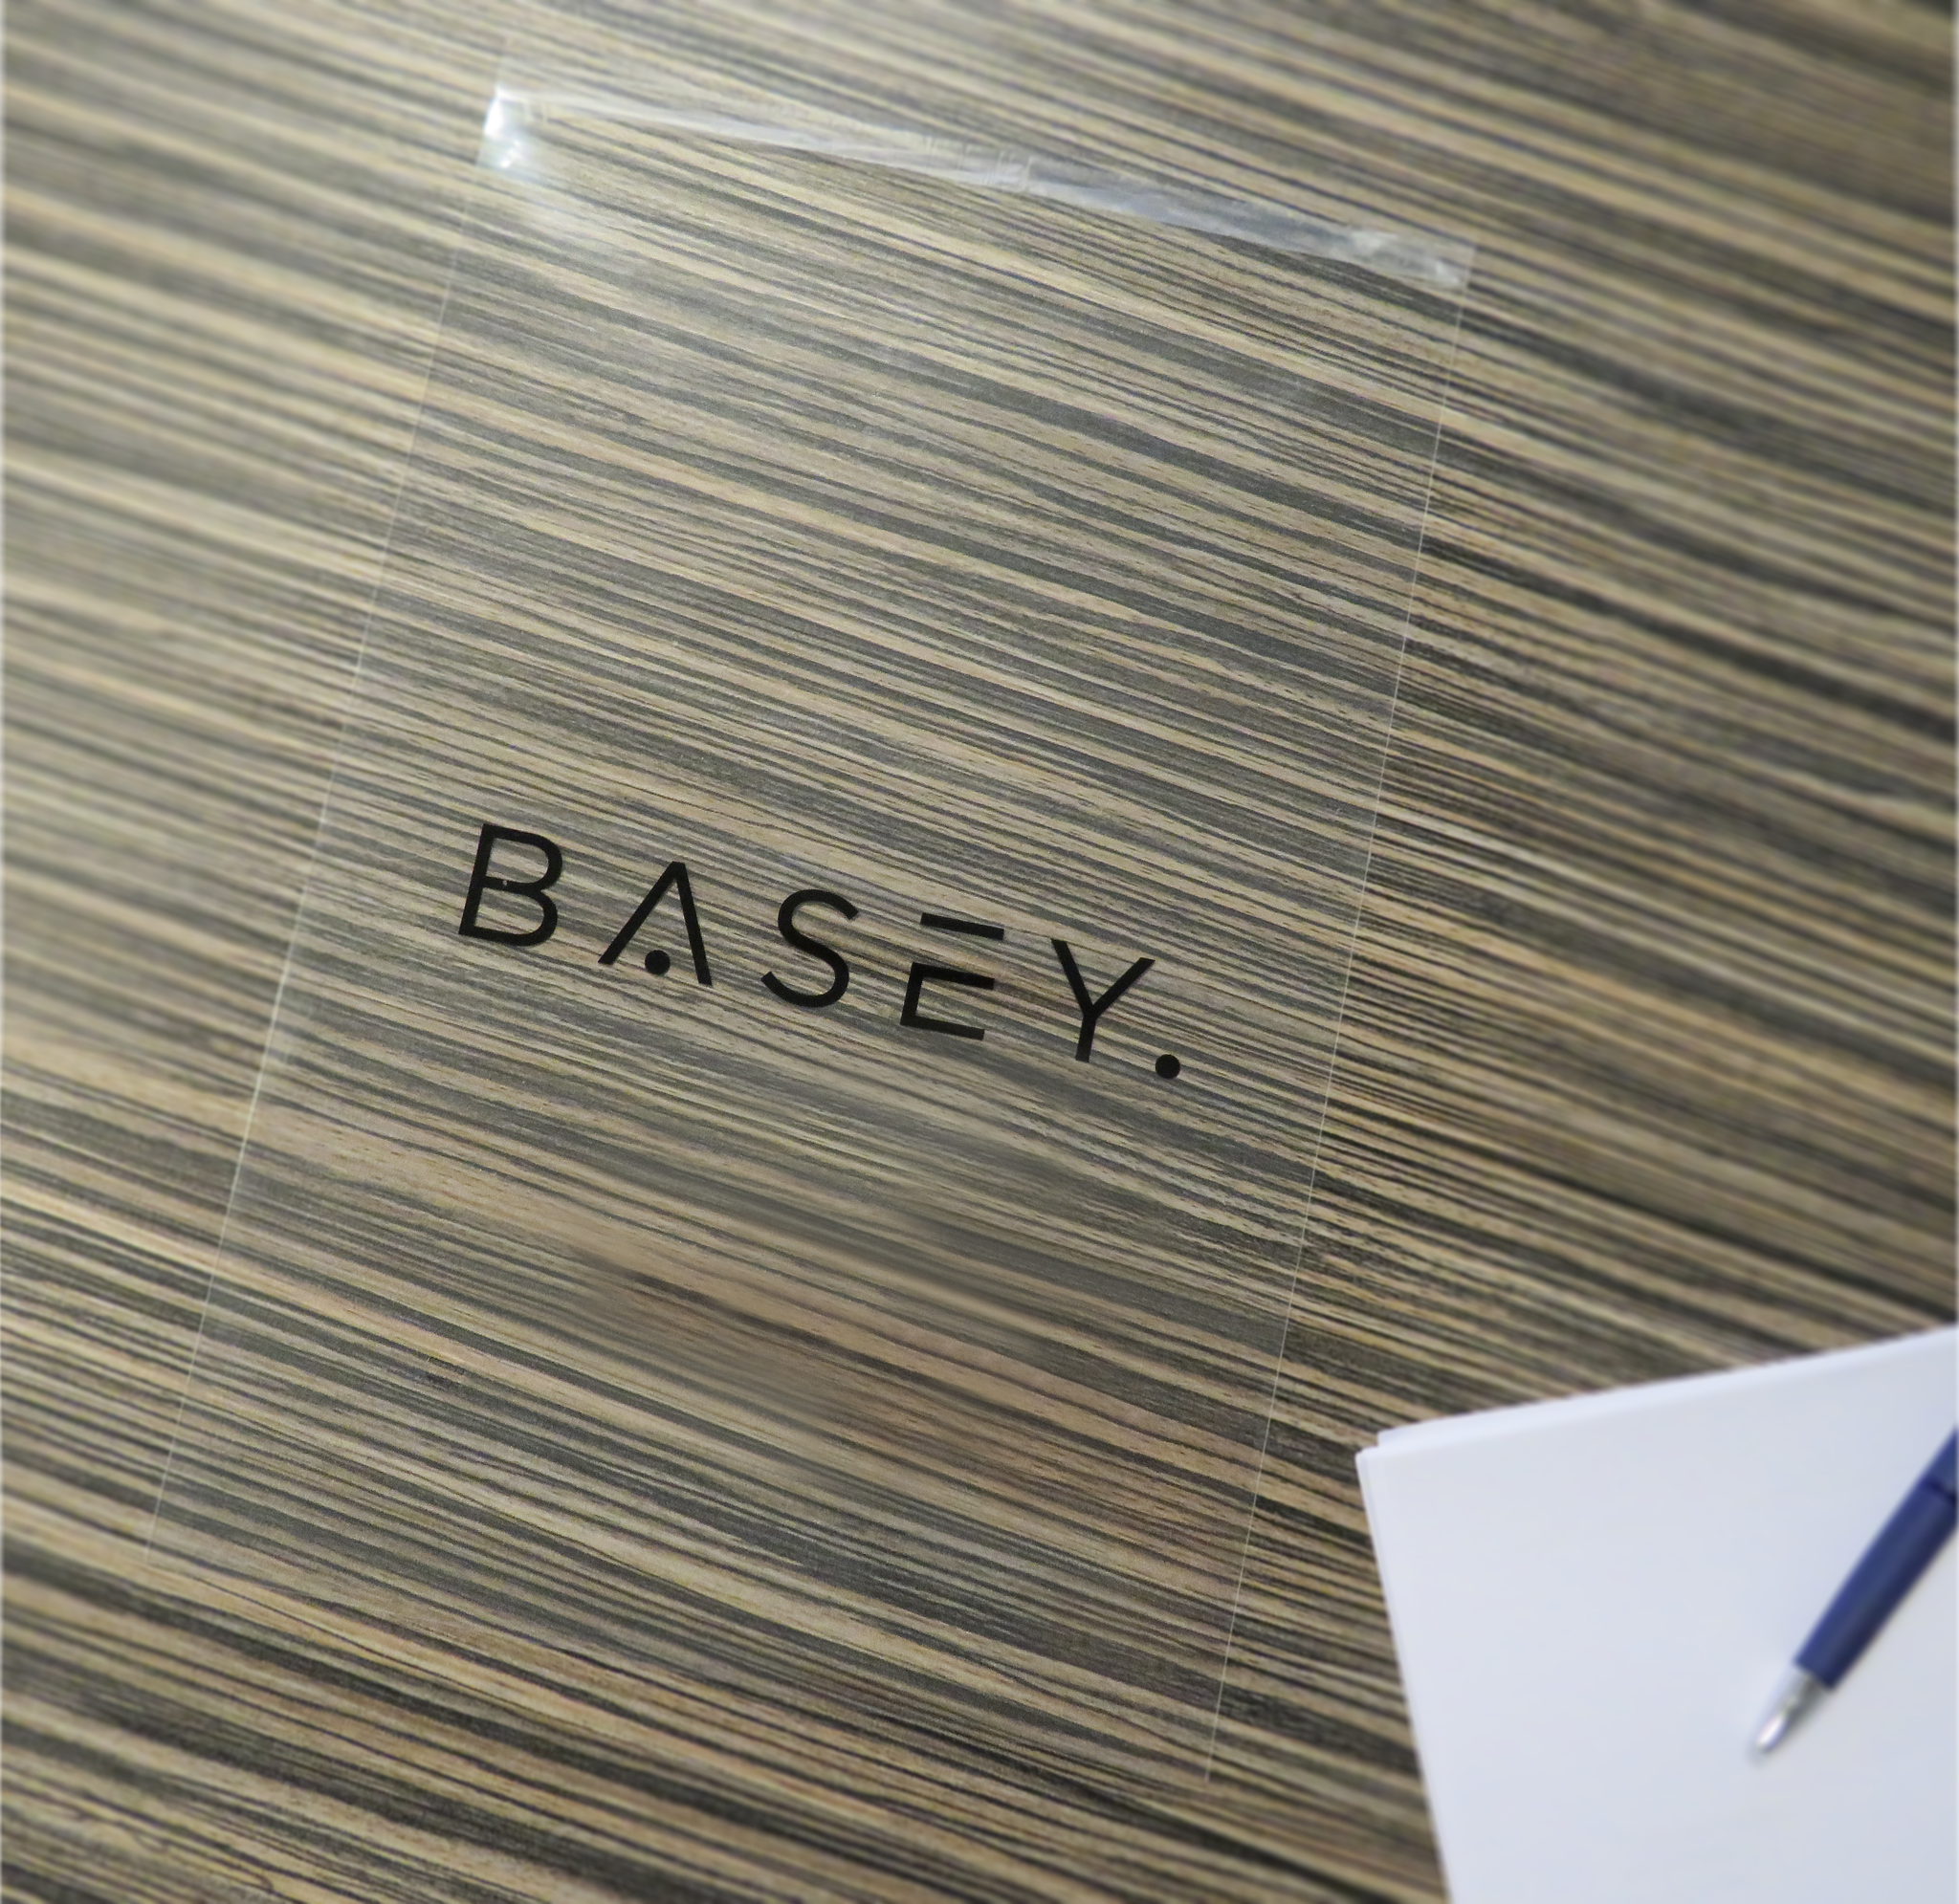 BASEY. BASEY. iPad Pro 12.9 2020 Screenprotector